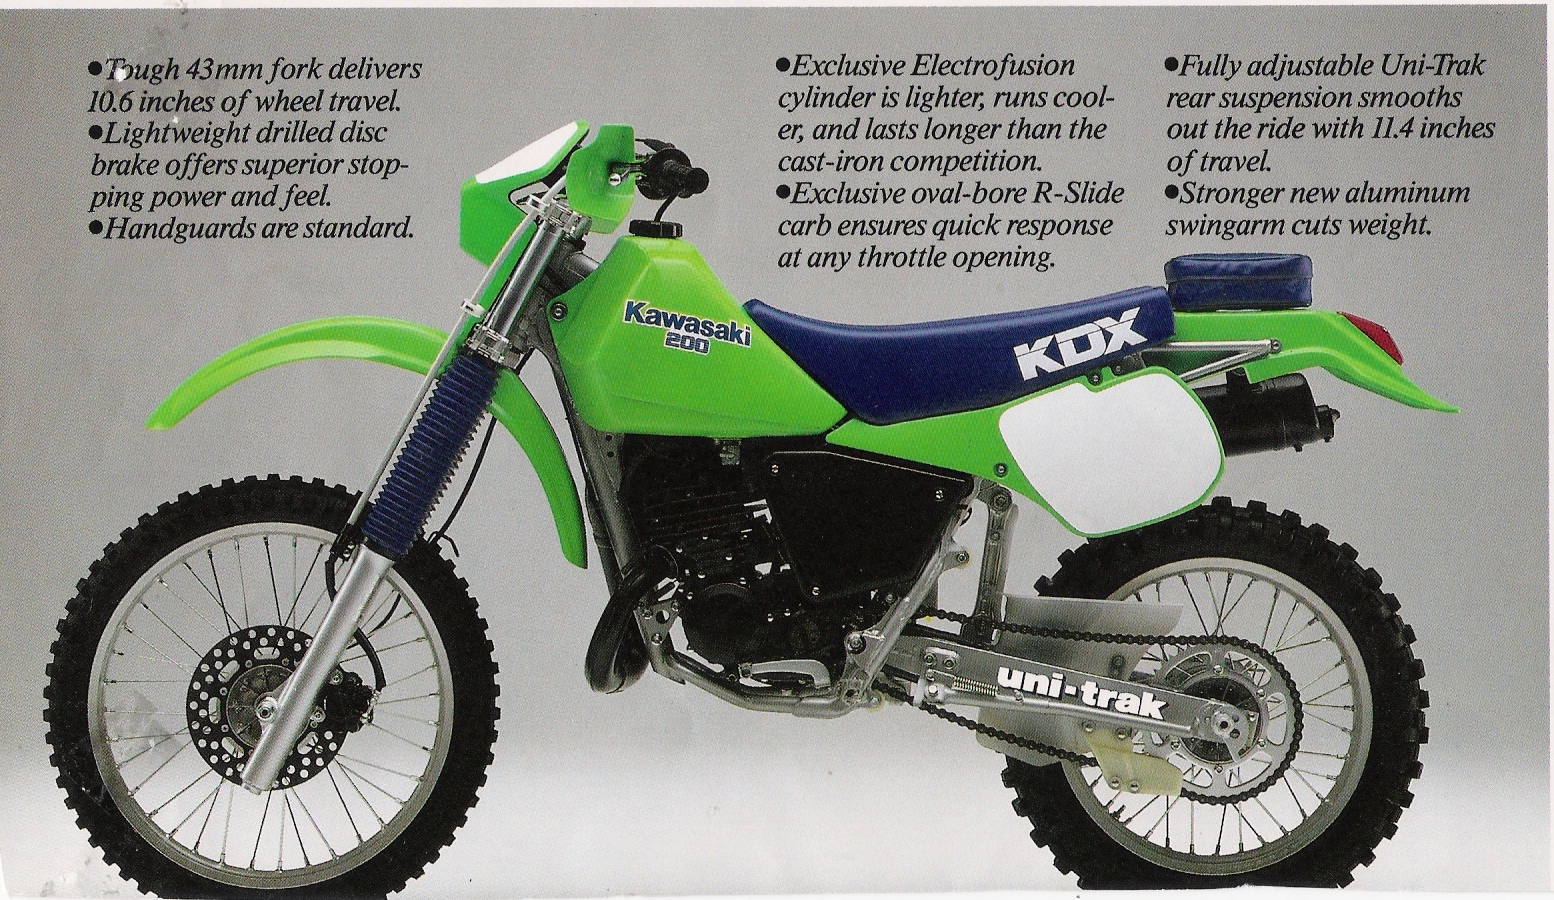 Мотоцикл Kawasaki KDX 200 1987 фото